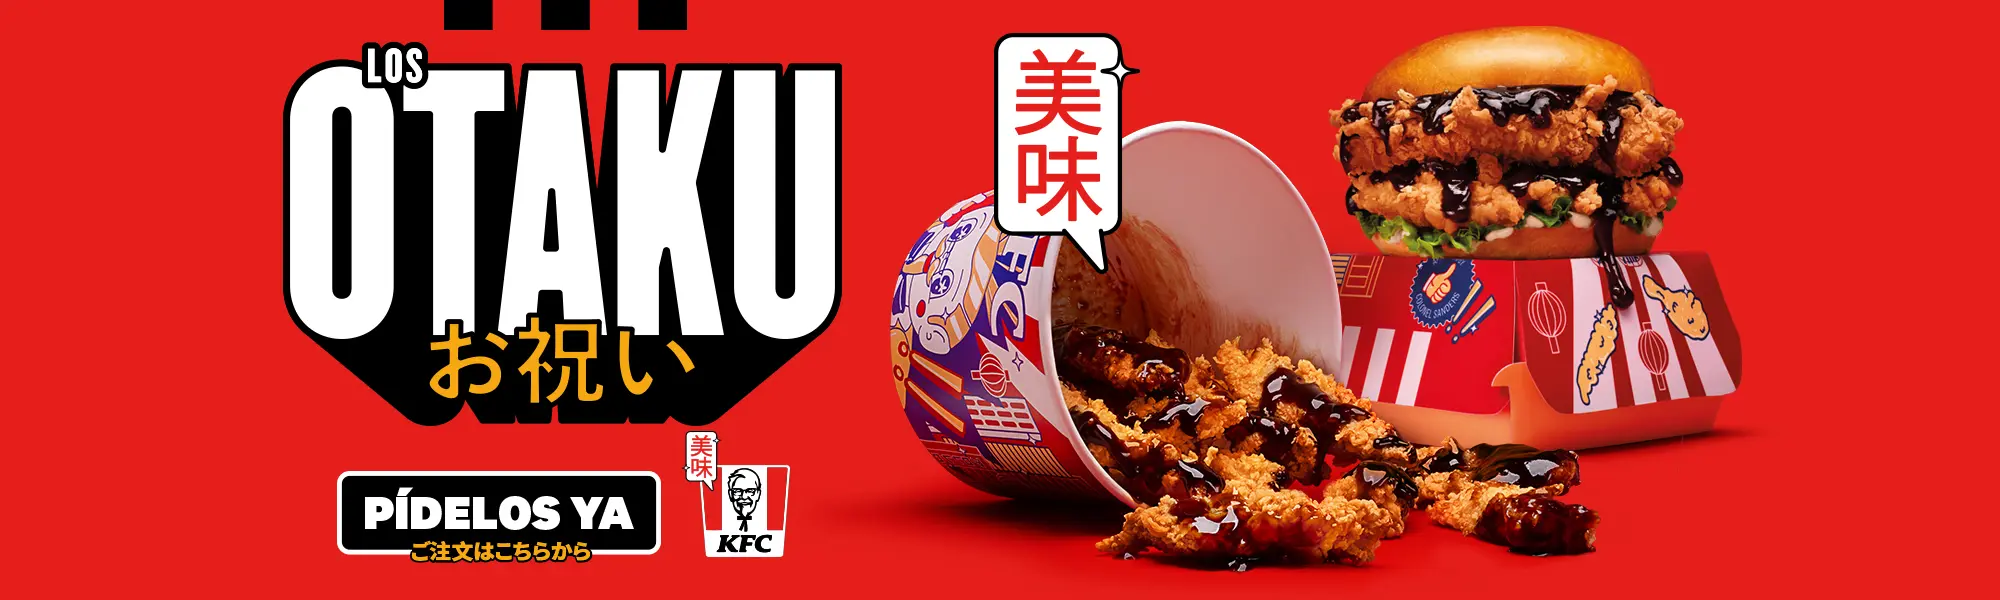 Los Otaku Meal by KFC